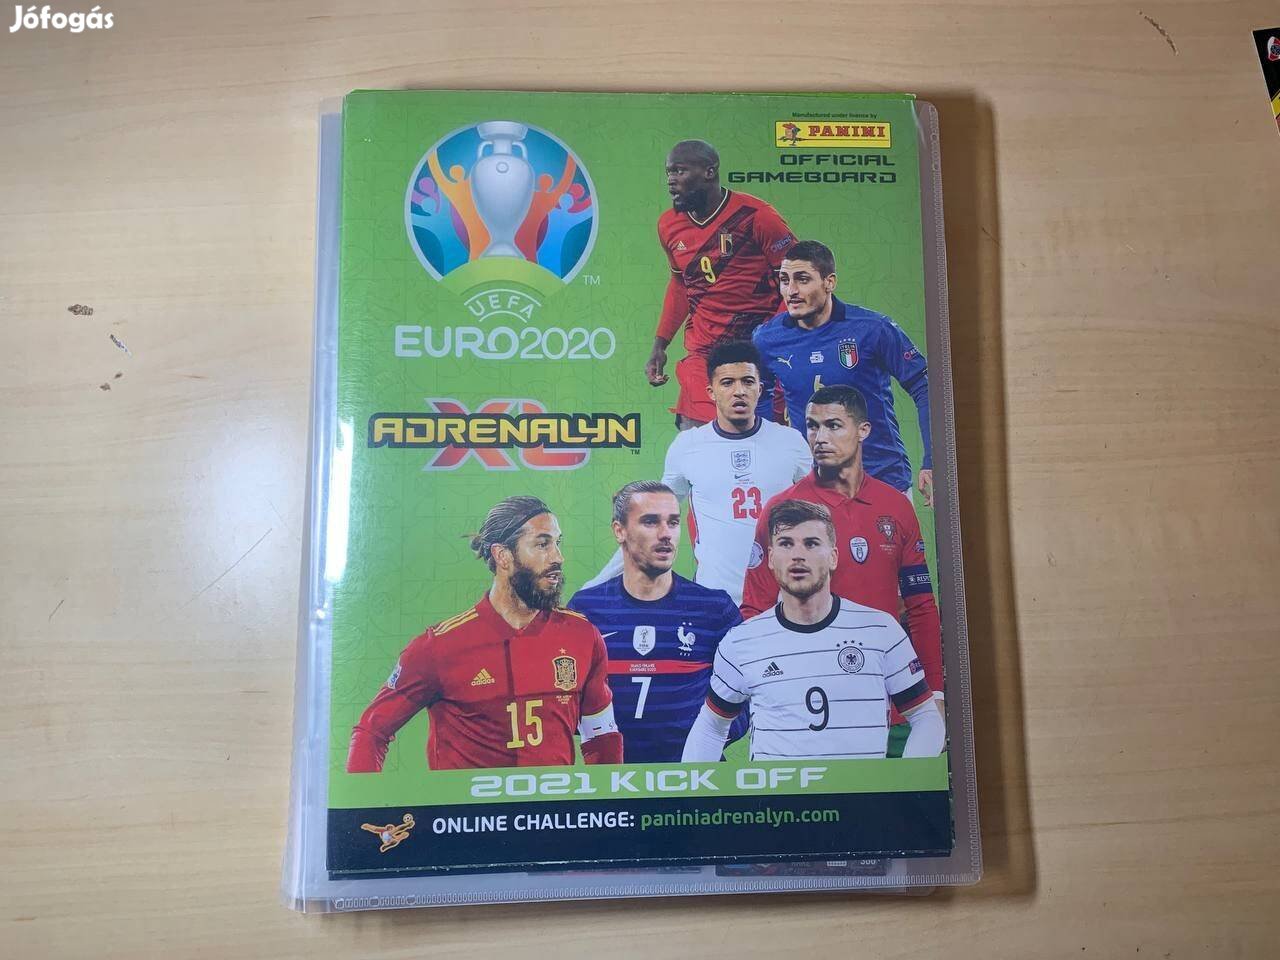 Uefa euro 2020 panini adrenalyn xl 2021 kick off album